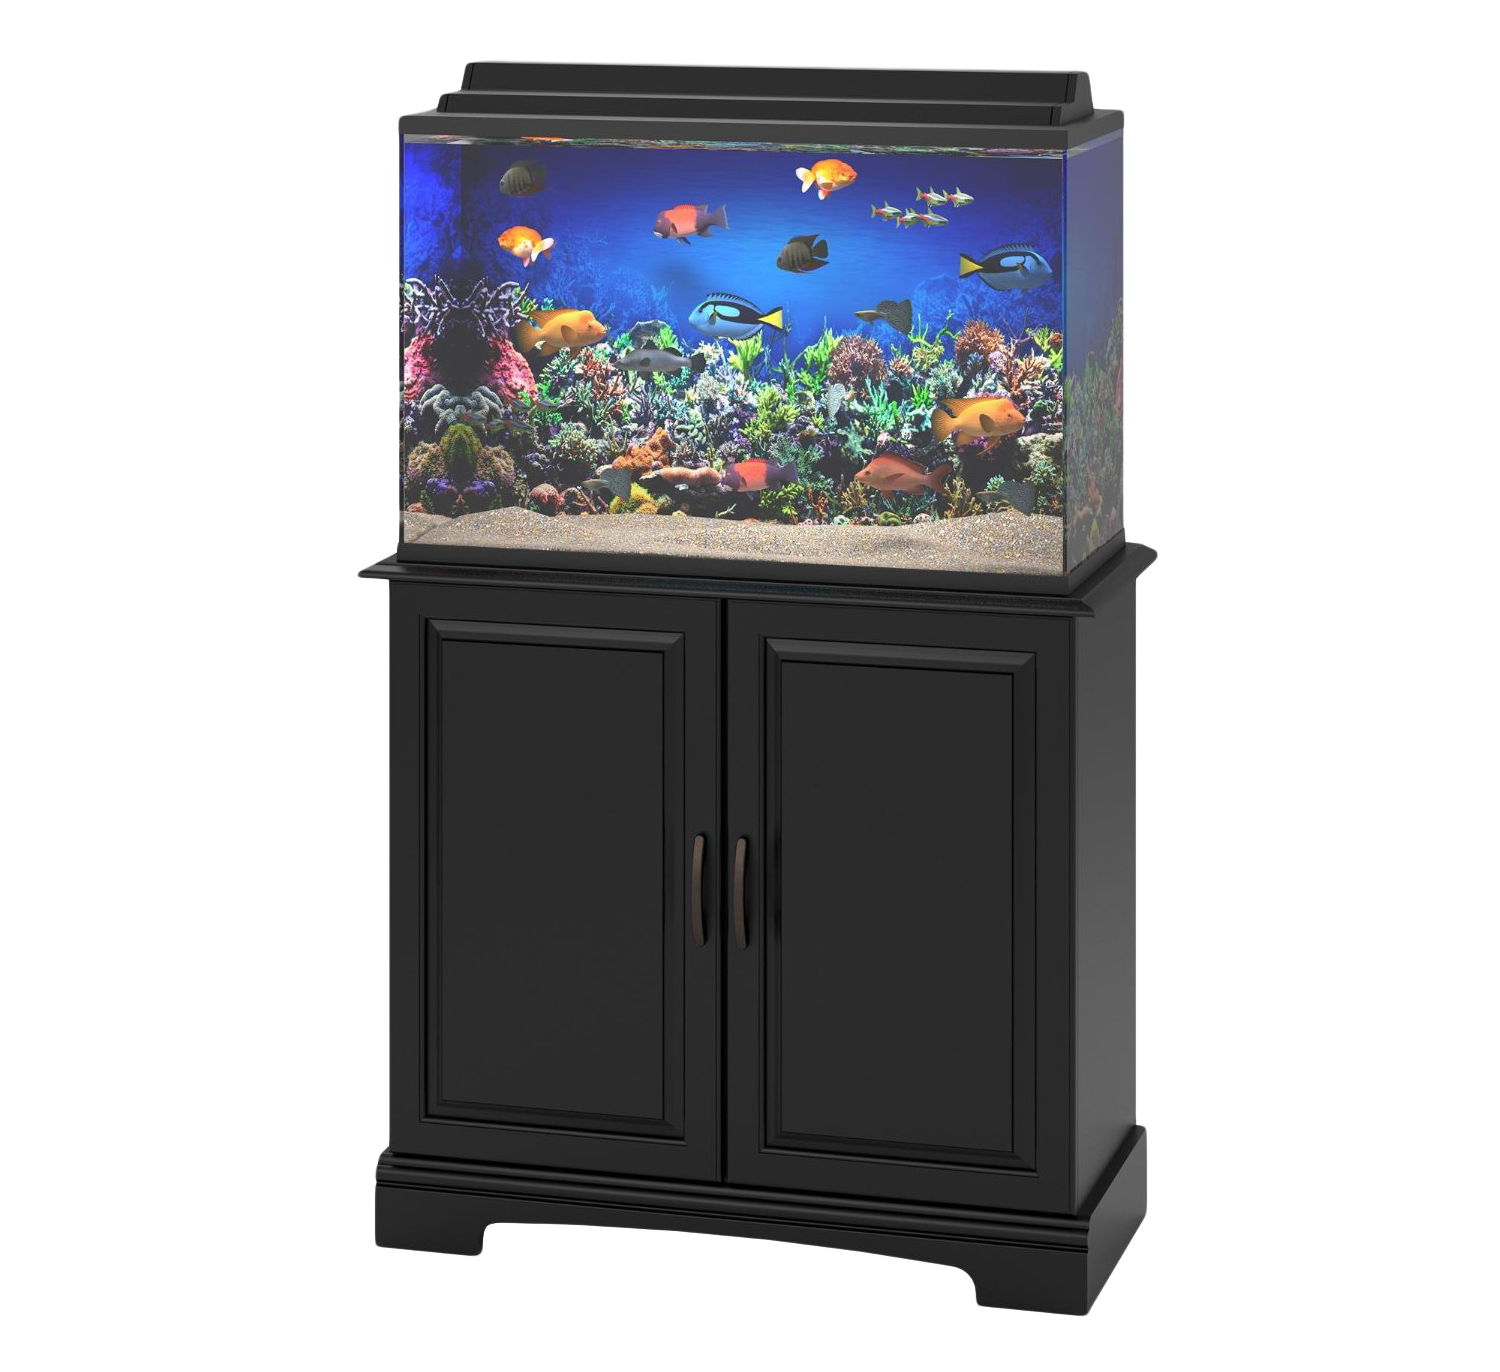 Aquarium Fish Tank PNG Background Image